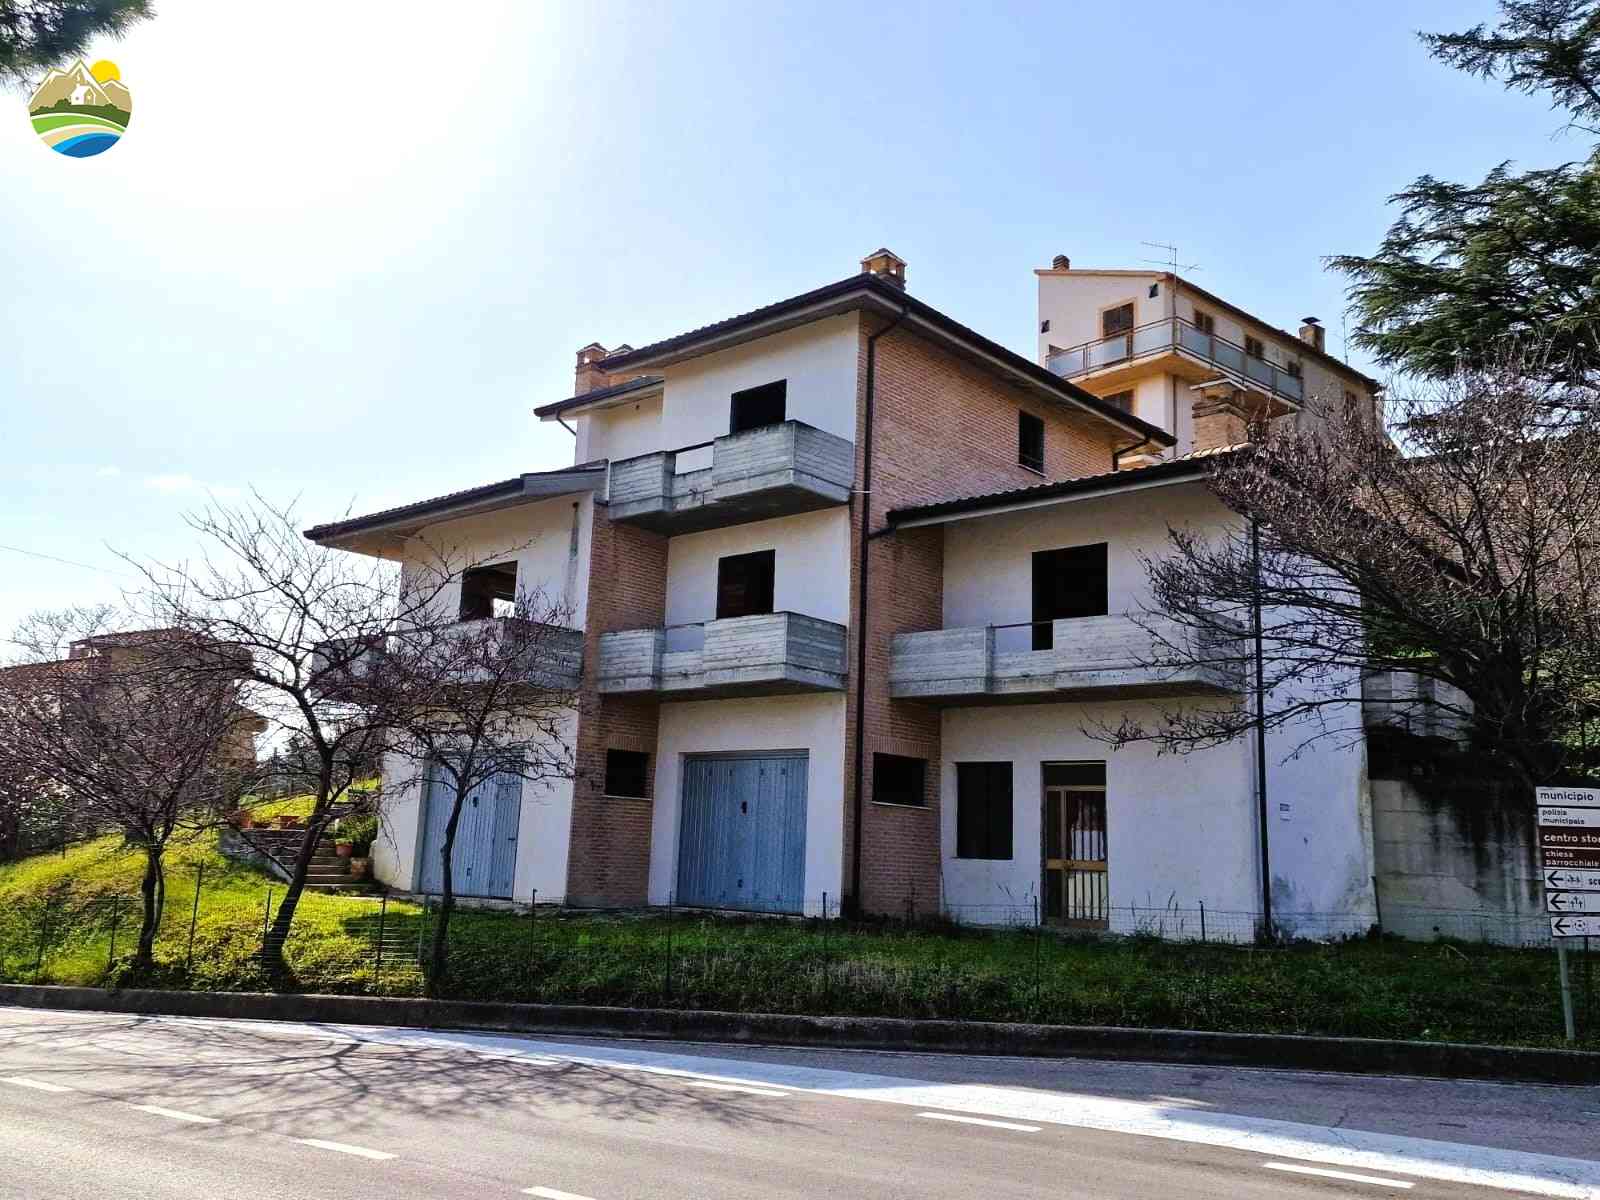 Villa Villa in vendita Castilenti (TE), Villa Mandorlo - Castilenti - EUR 129.969 10